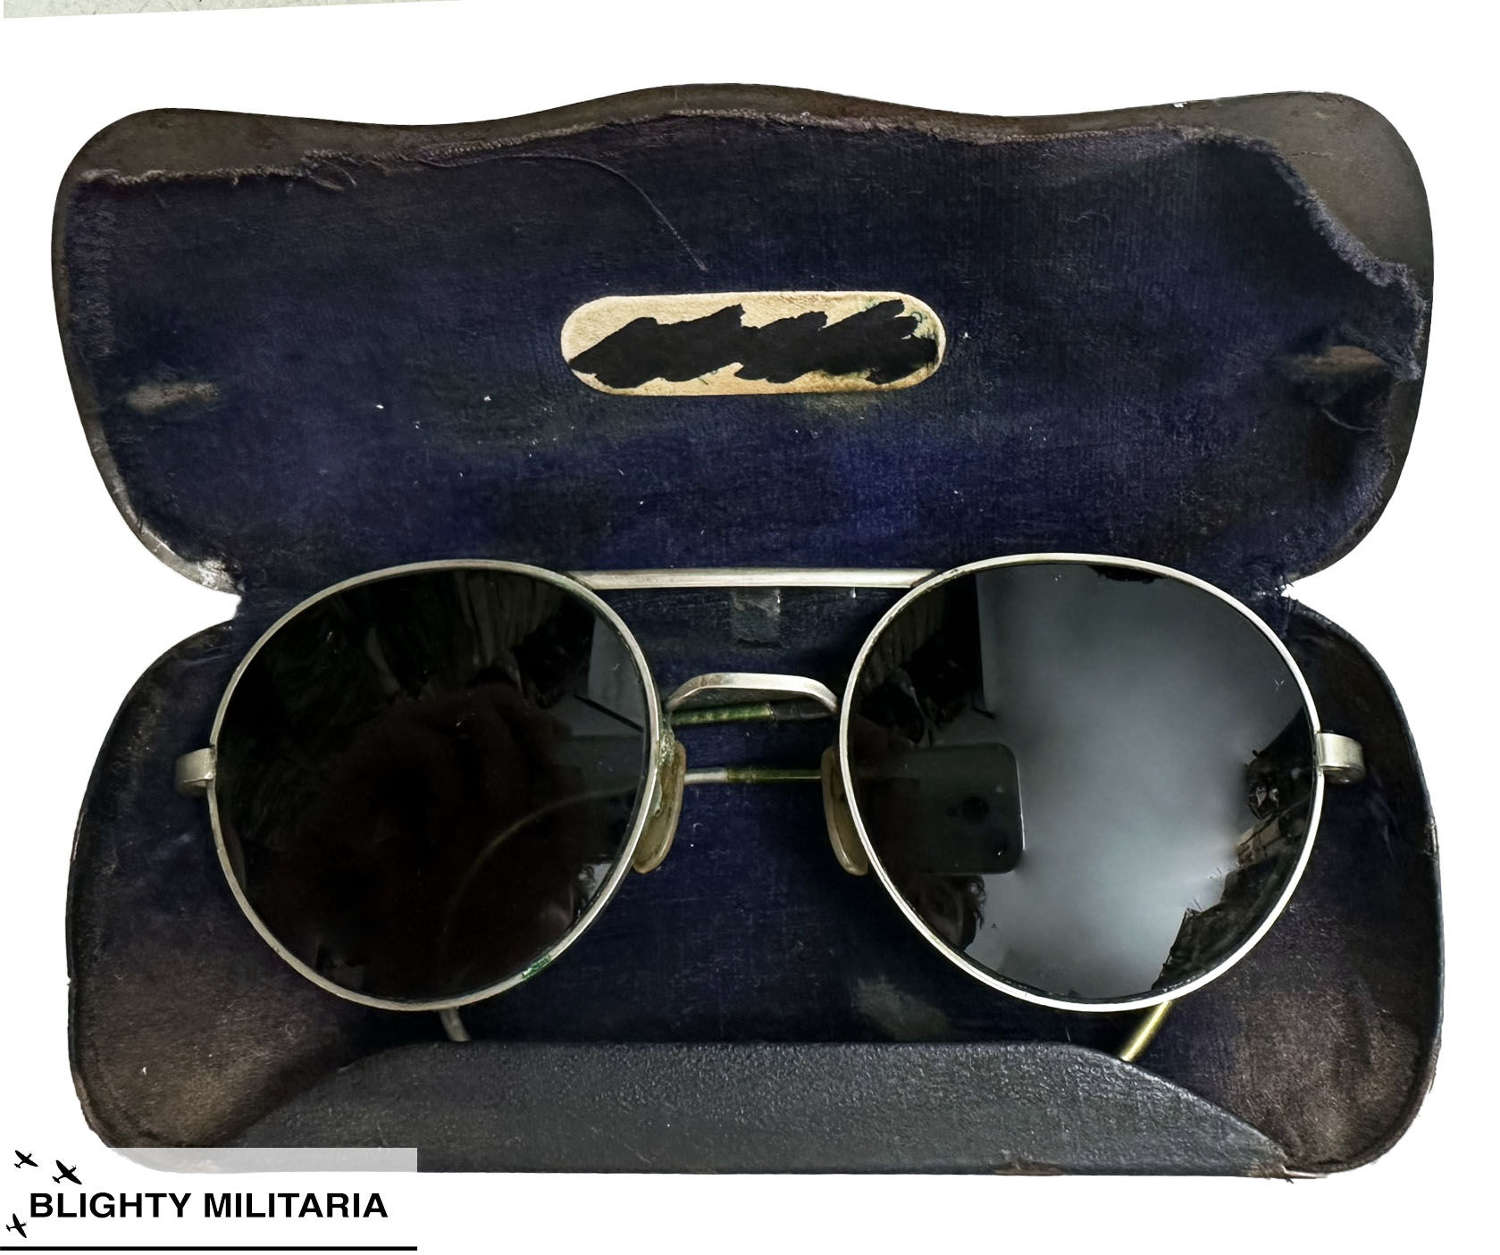 Original 1950s RAF Type G Sunglasses